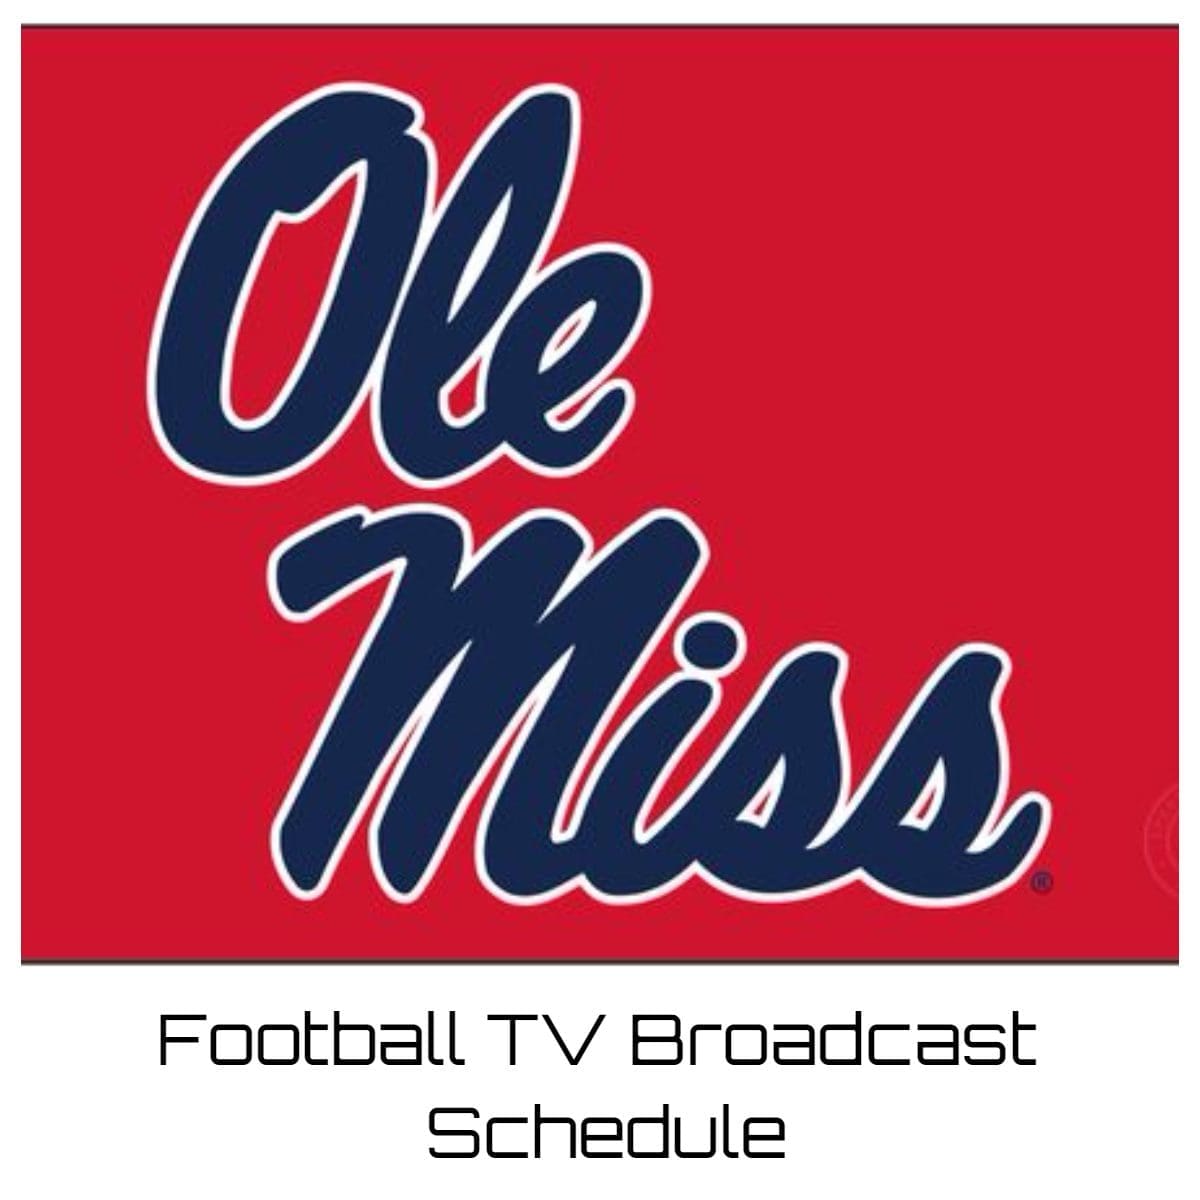 Ole Miss Rebels Football TV Broadcast Schedule